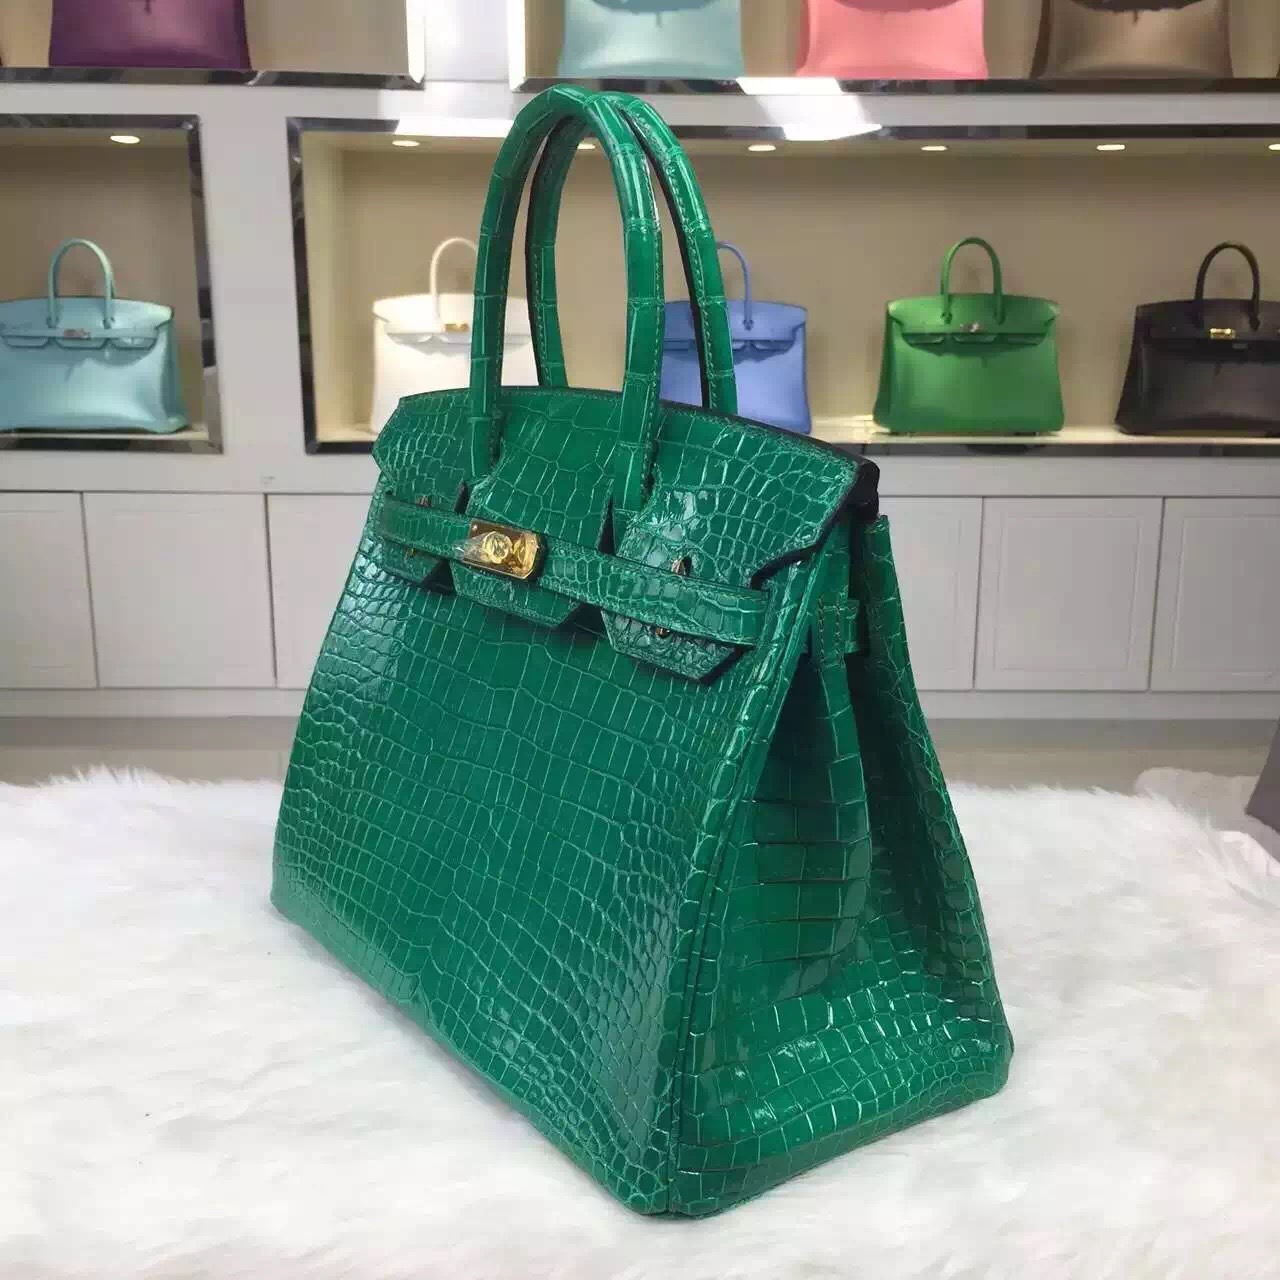 Hot Sale Hermes 6Q Emerald Green Porosus Crocodile Leather Birkin Bag 30CM